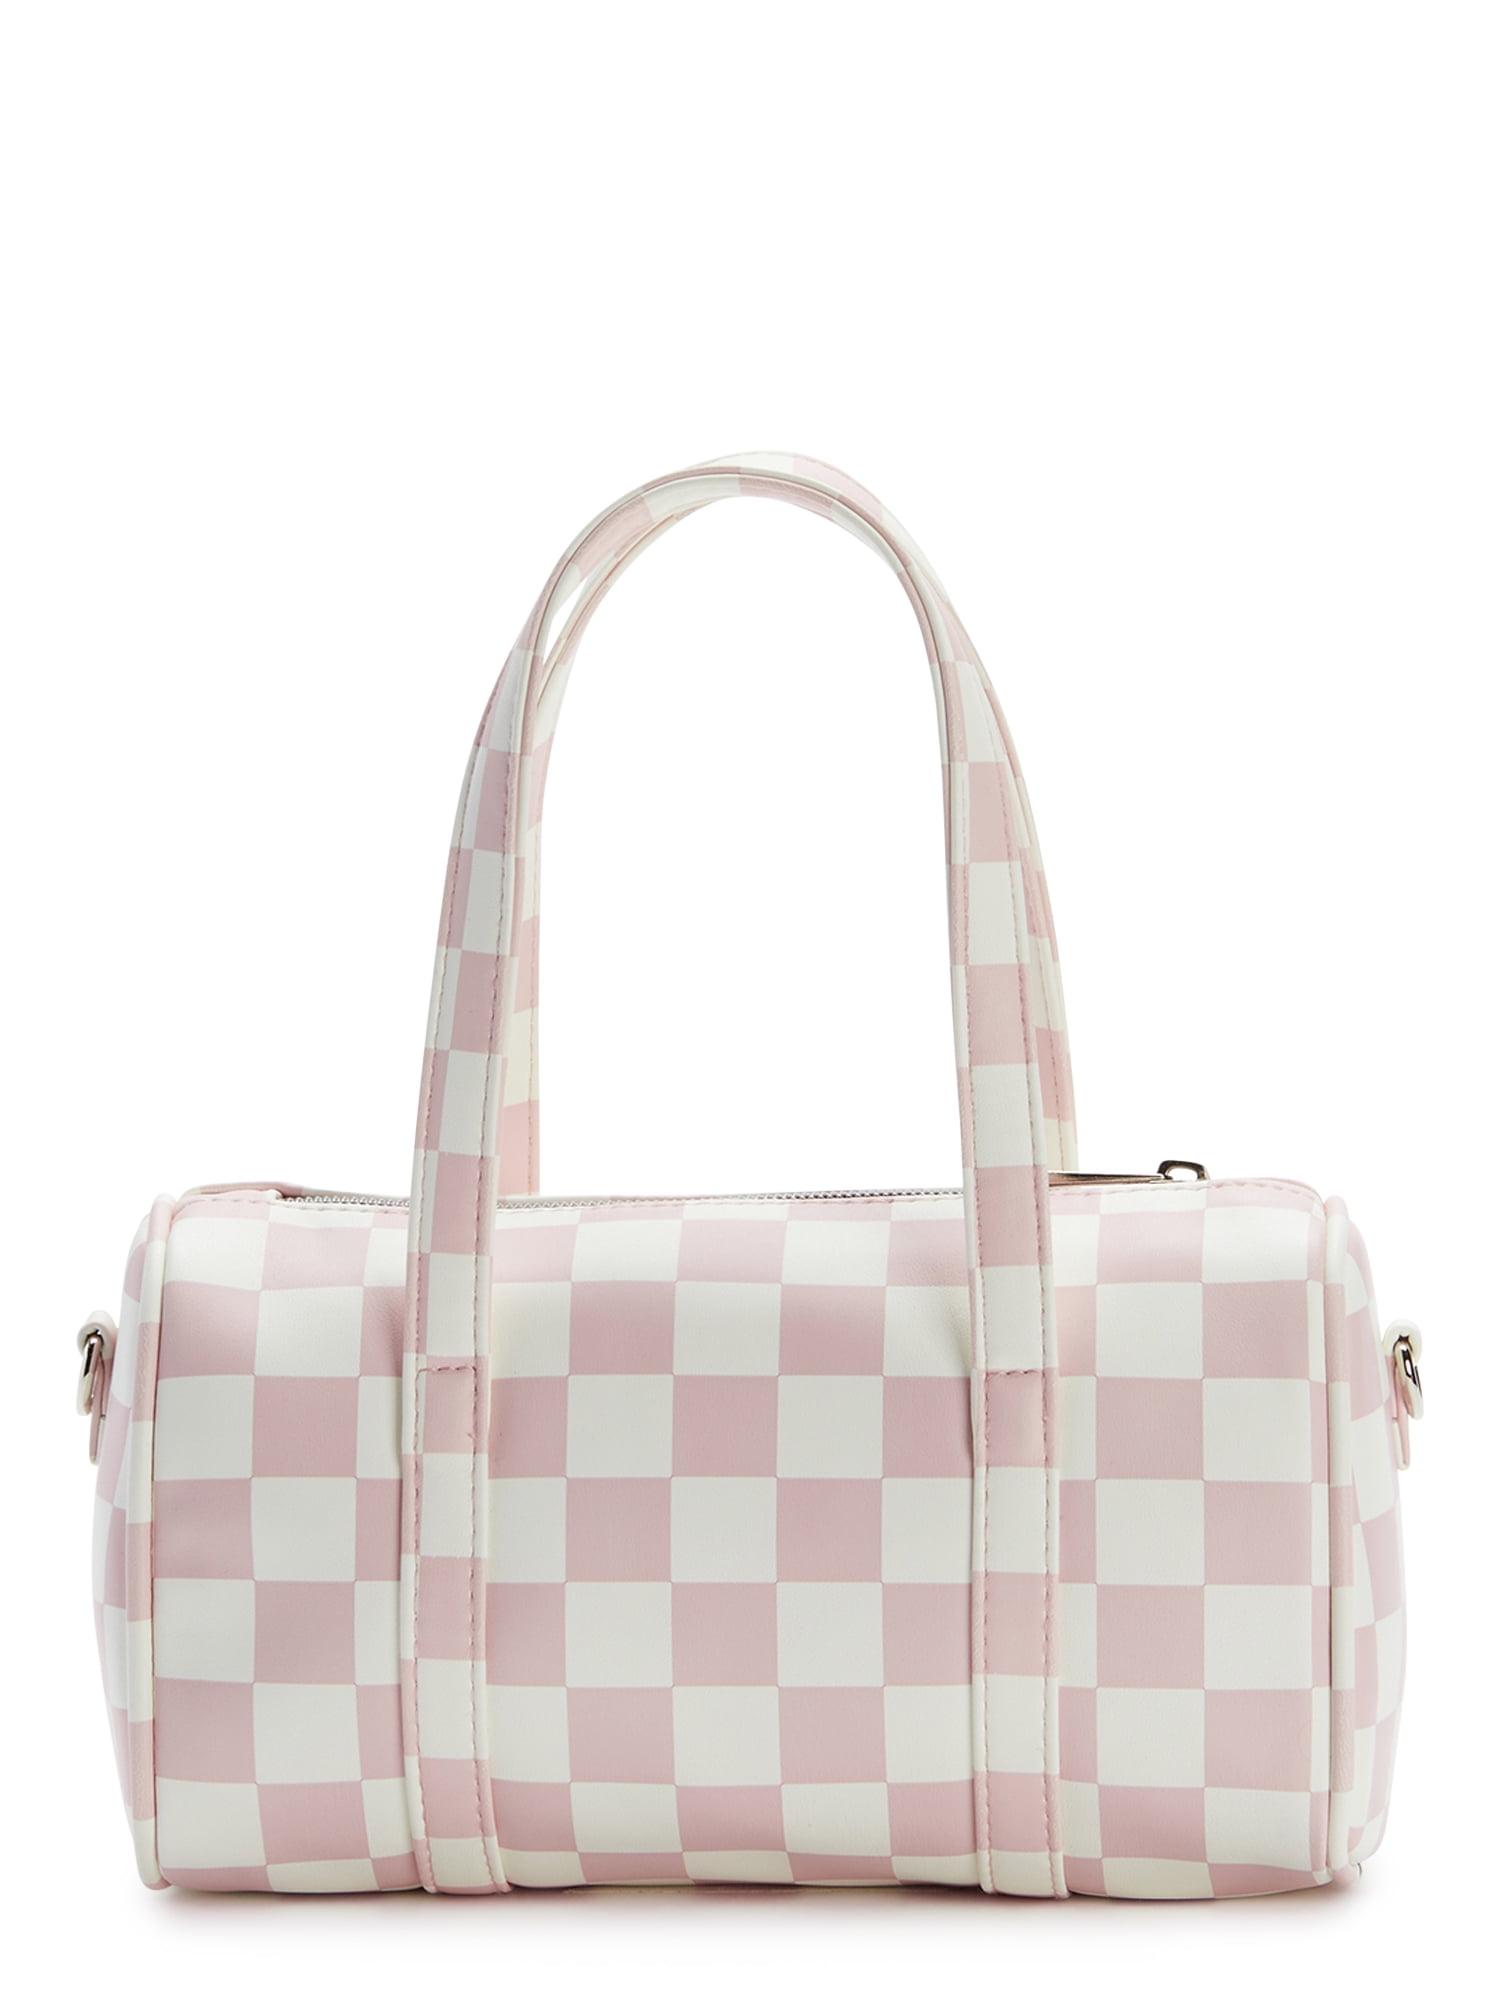 Fauré Le Page Calibre 21 Bag - Neutrals Mini Bags, Handbags - FLP20127